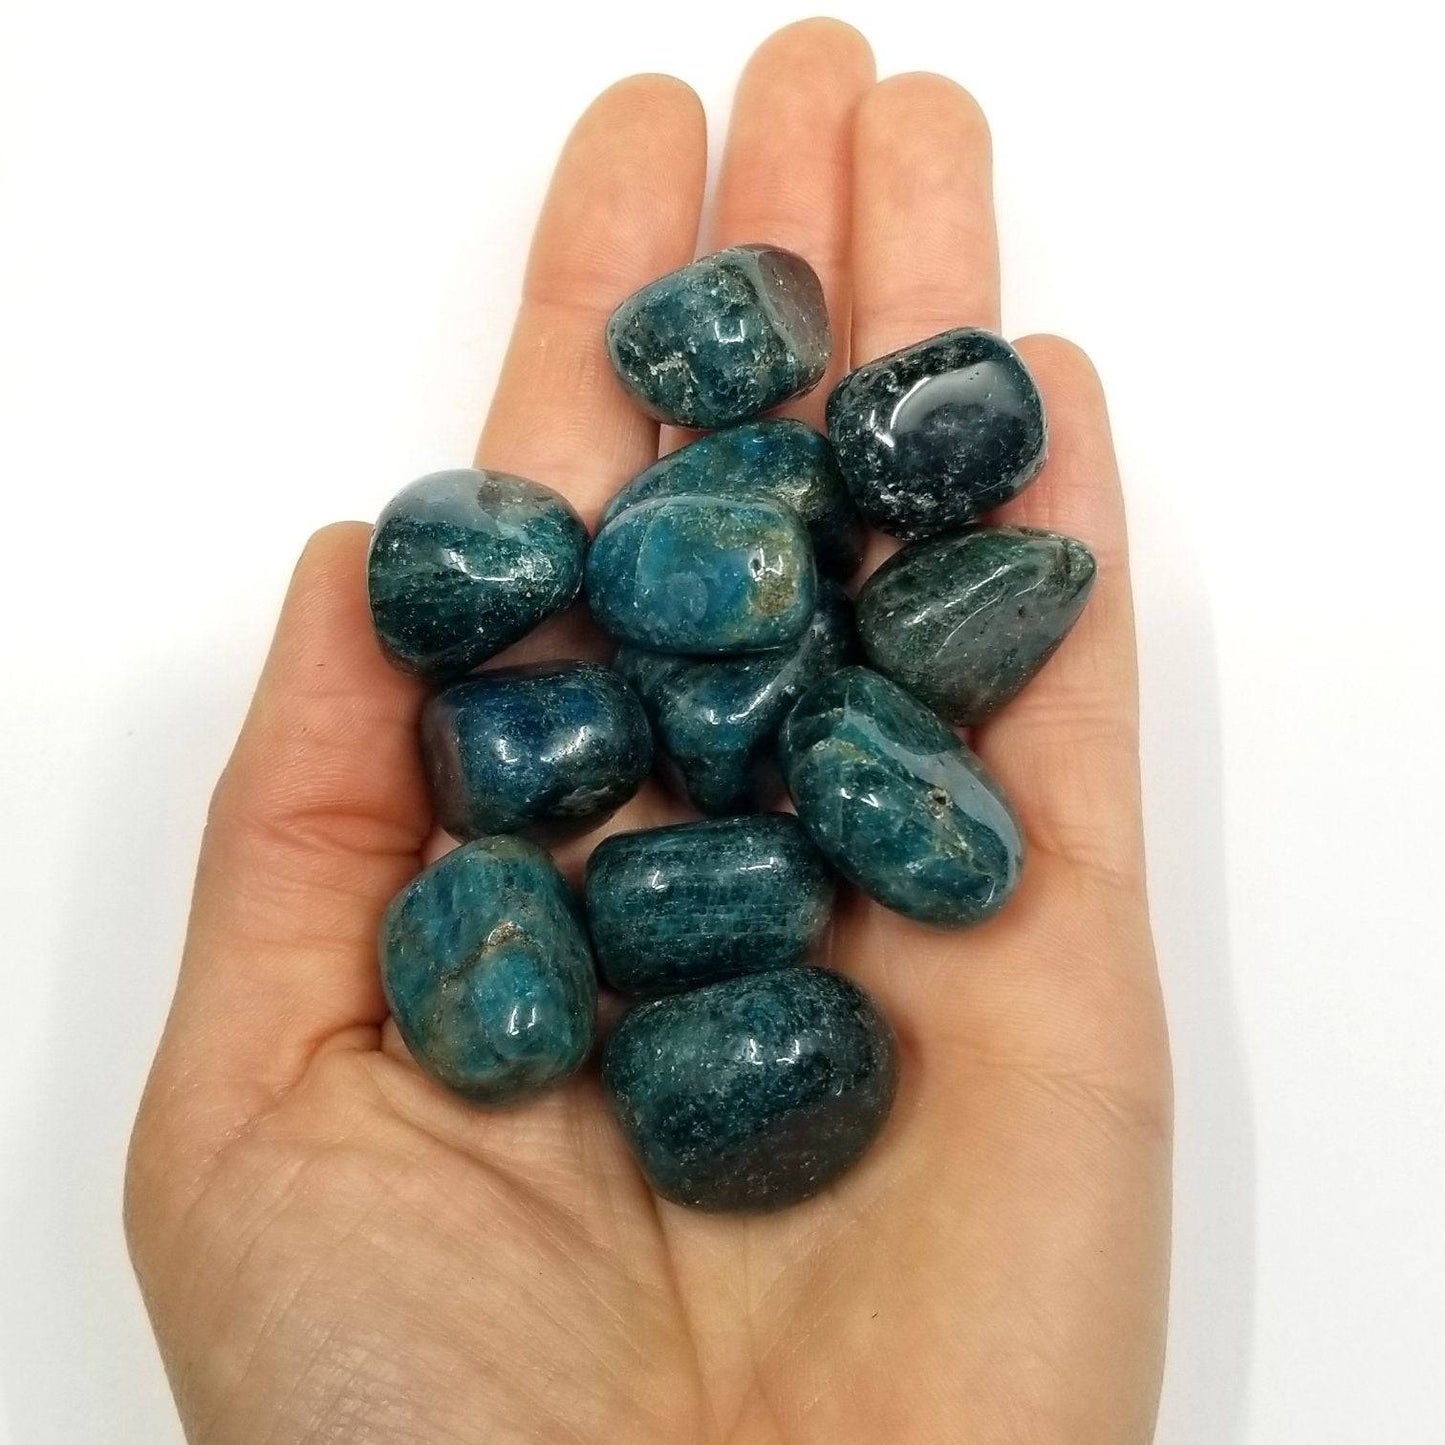 Blue Apatite Tumbled Stones 1 lb